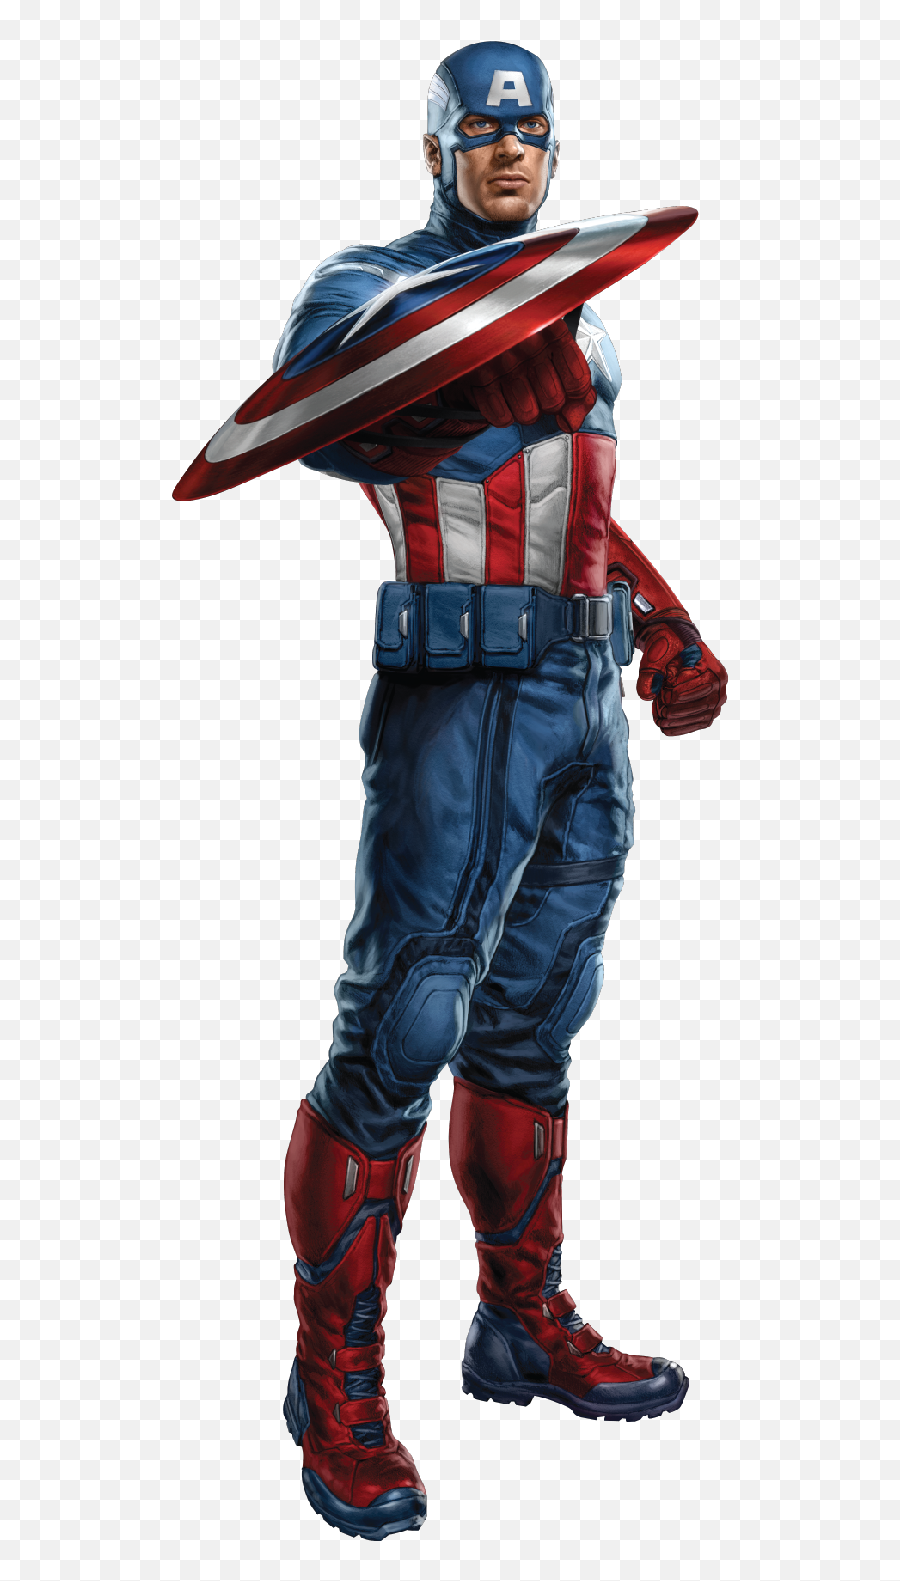 Captain America Png - Captain America Png Transparent Images Captain America Marvel Cinematic Universe,Steve Rogers Png